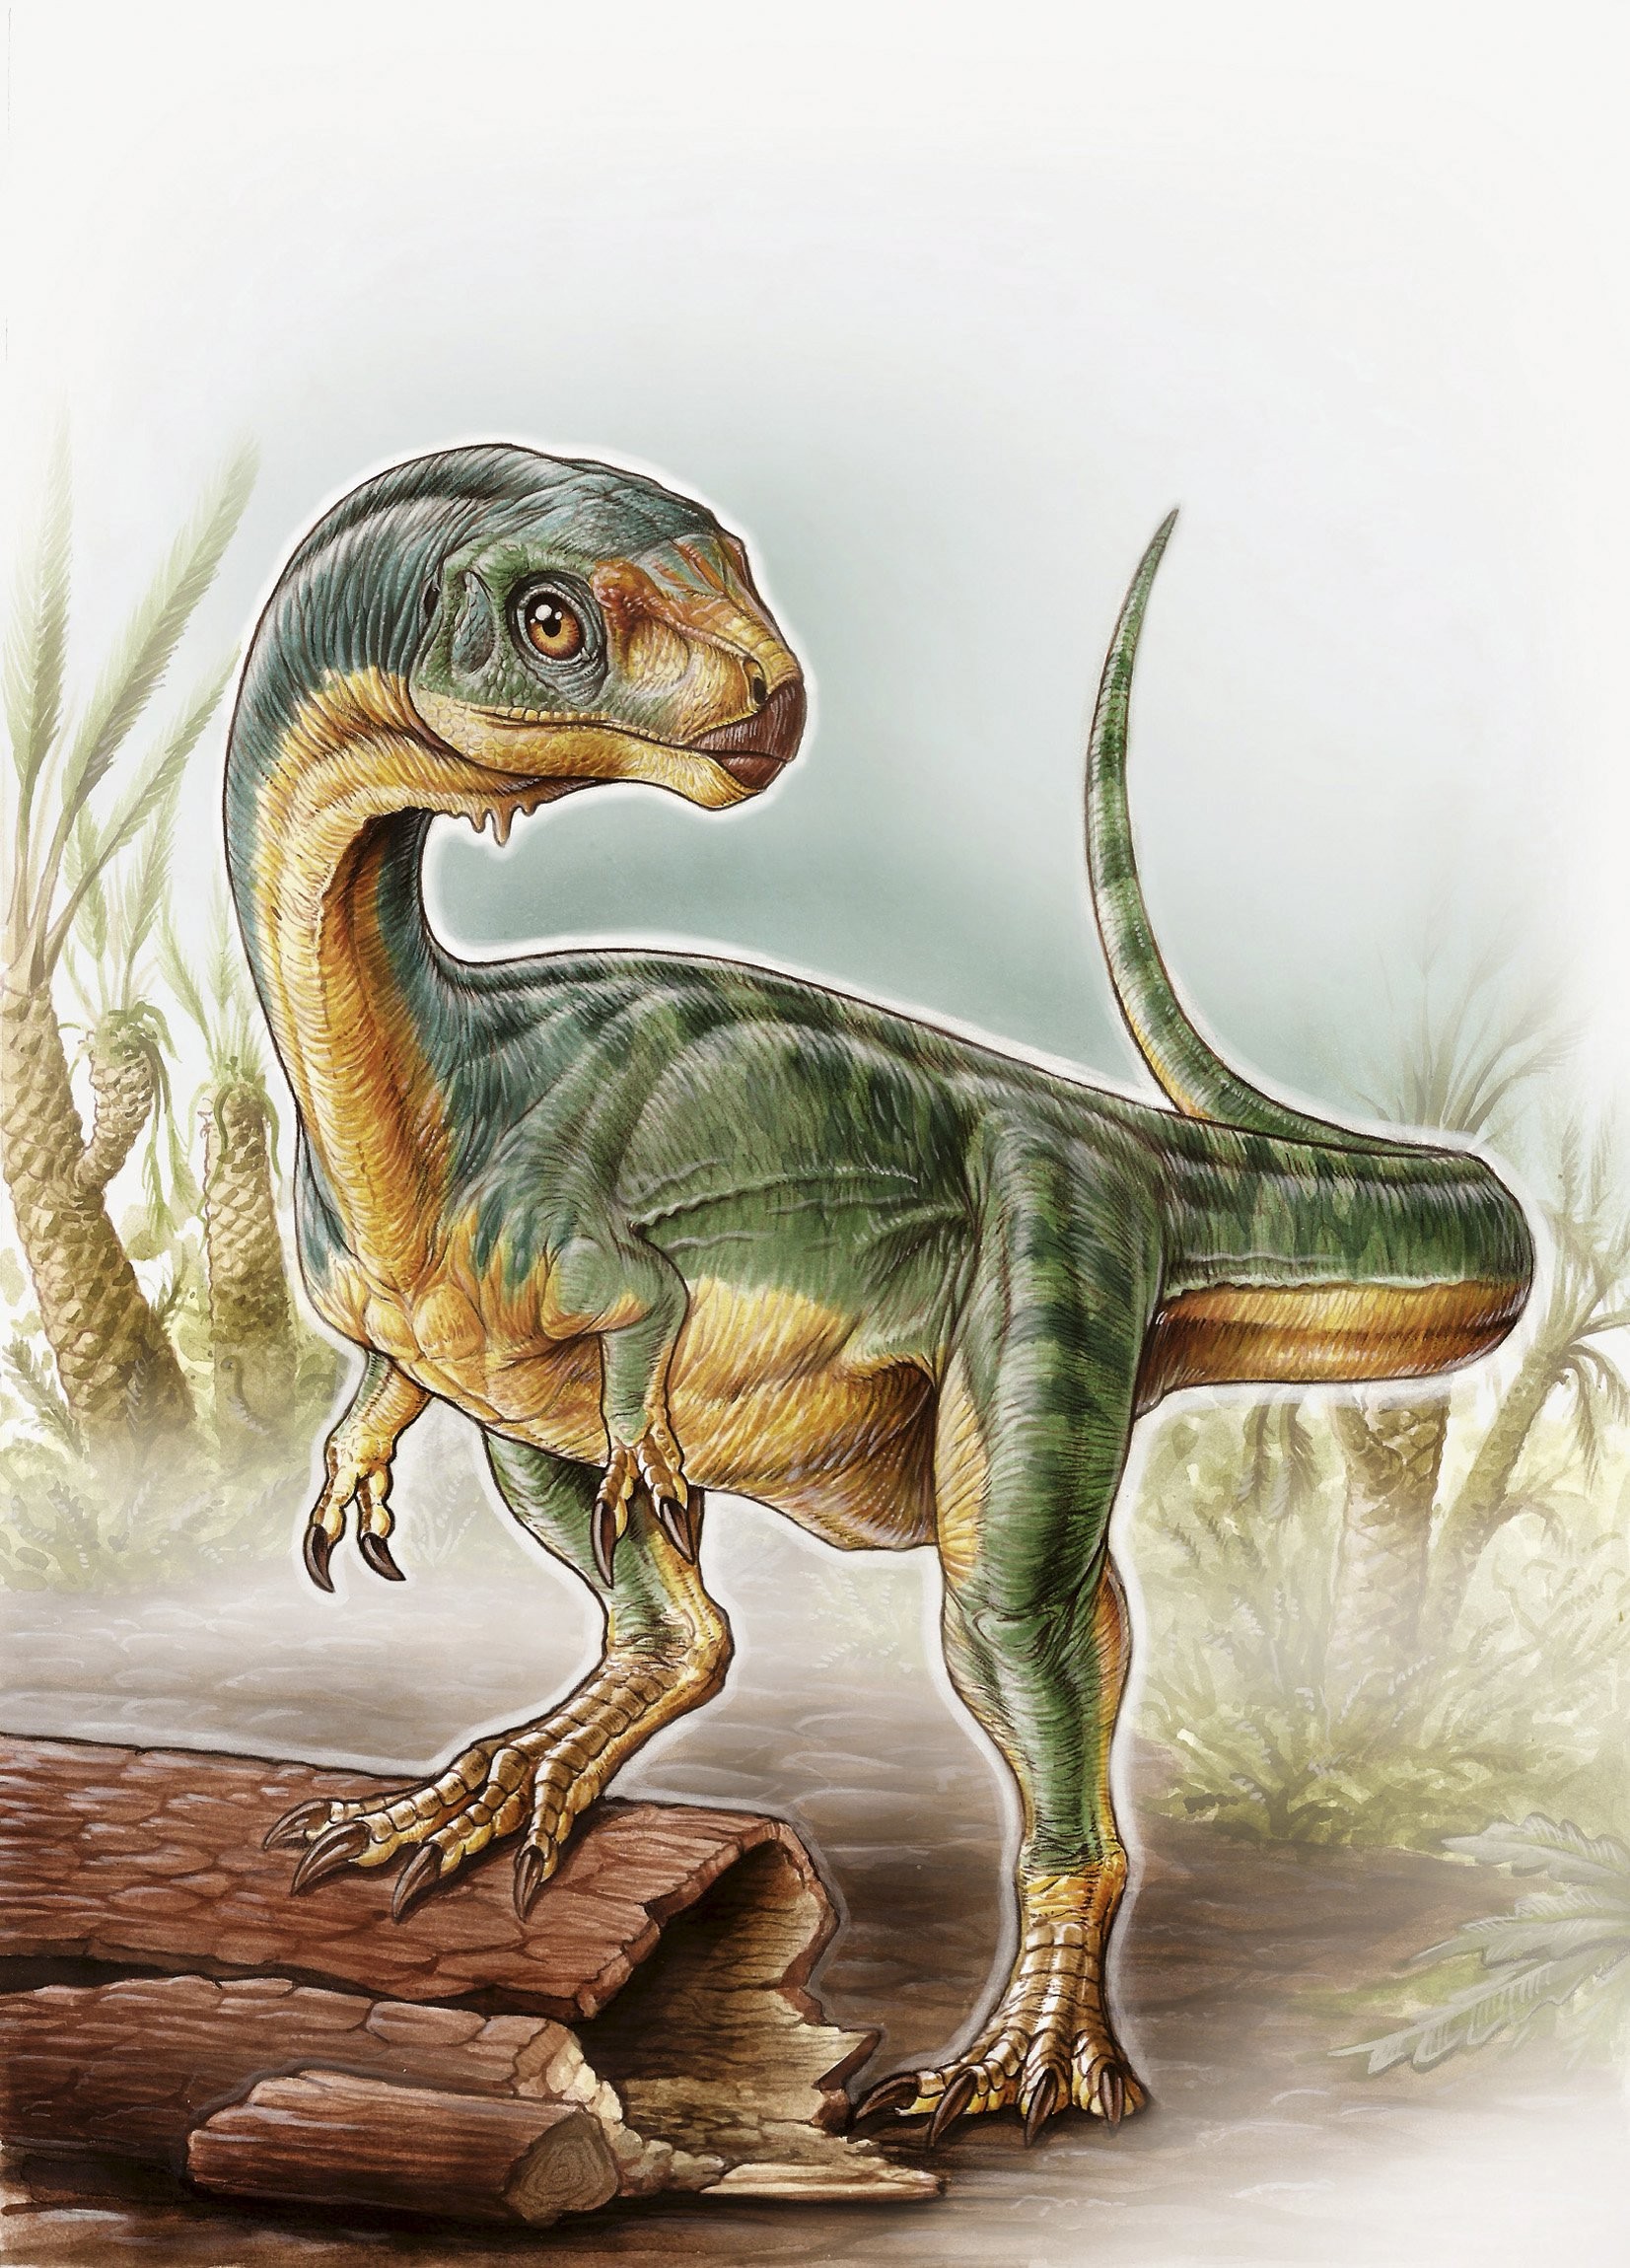 Ilustrao mostra exemplar da nova espcie de dinossauro batizada de 'Chilesaurus diegosuarezi' (Foto: Gabriel Lio/University of Birmingham/Reuters)